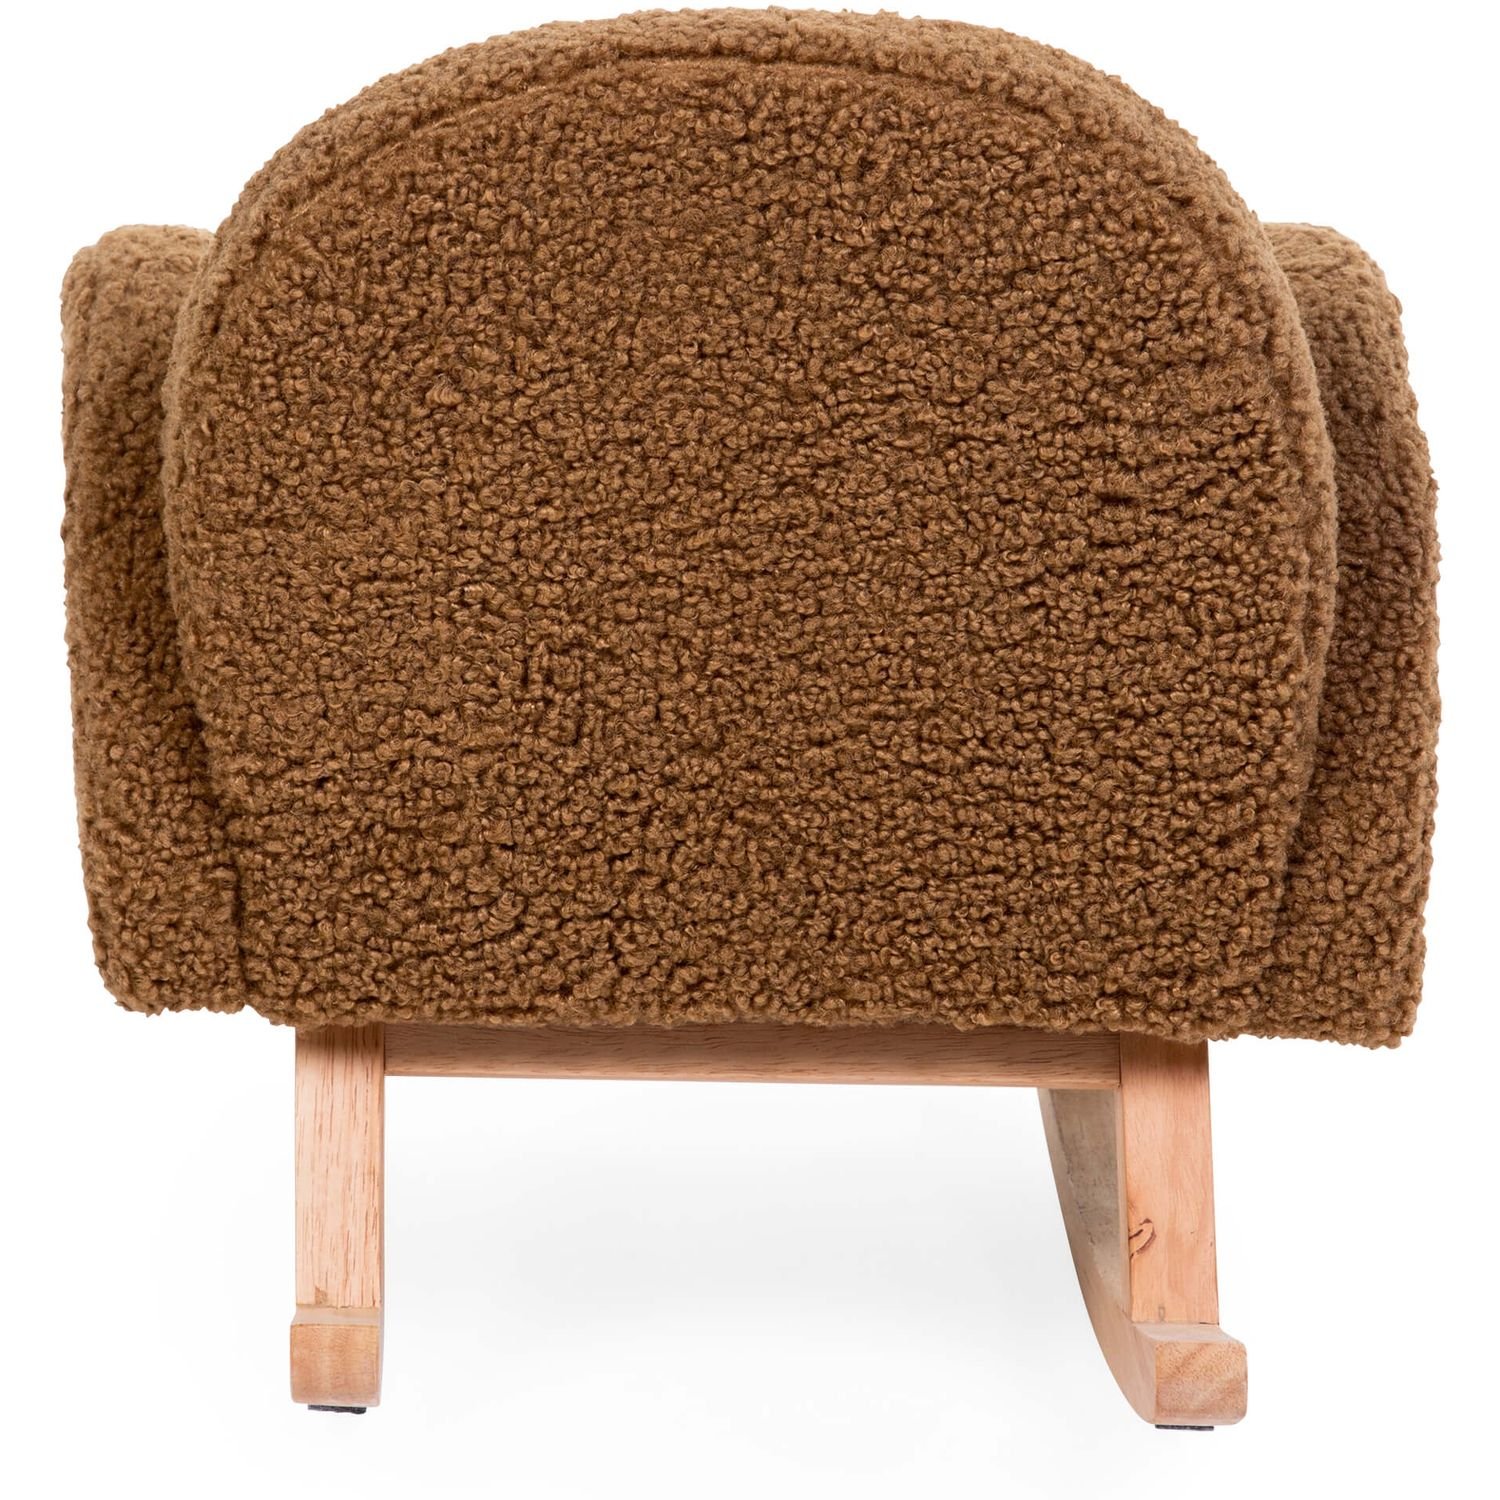 Кресло-качалка Childhome Teddy brown, коричневое (RCKTOB) - фото 4